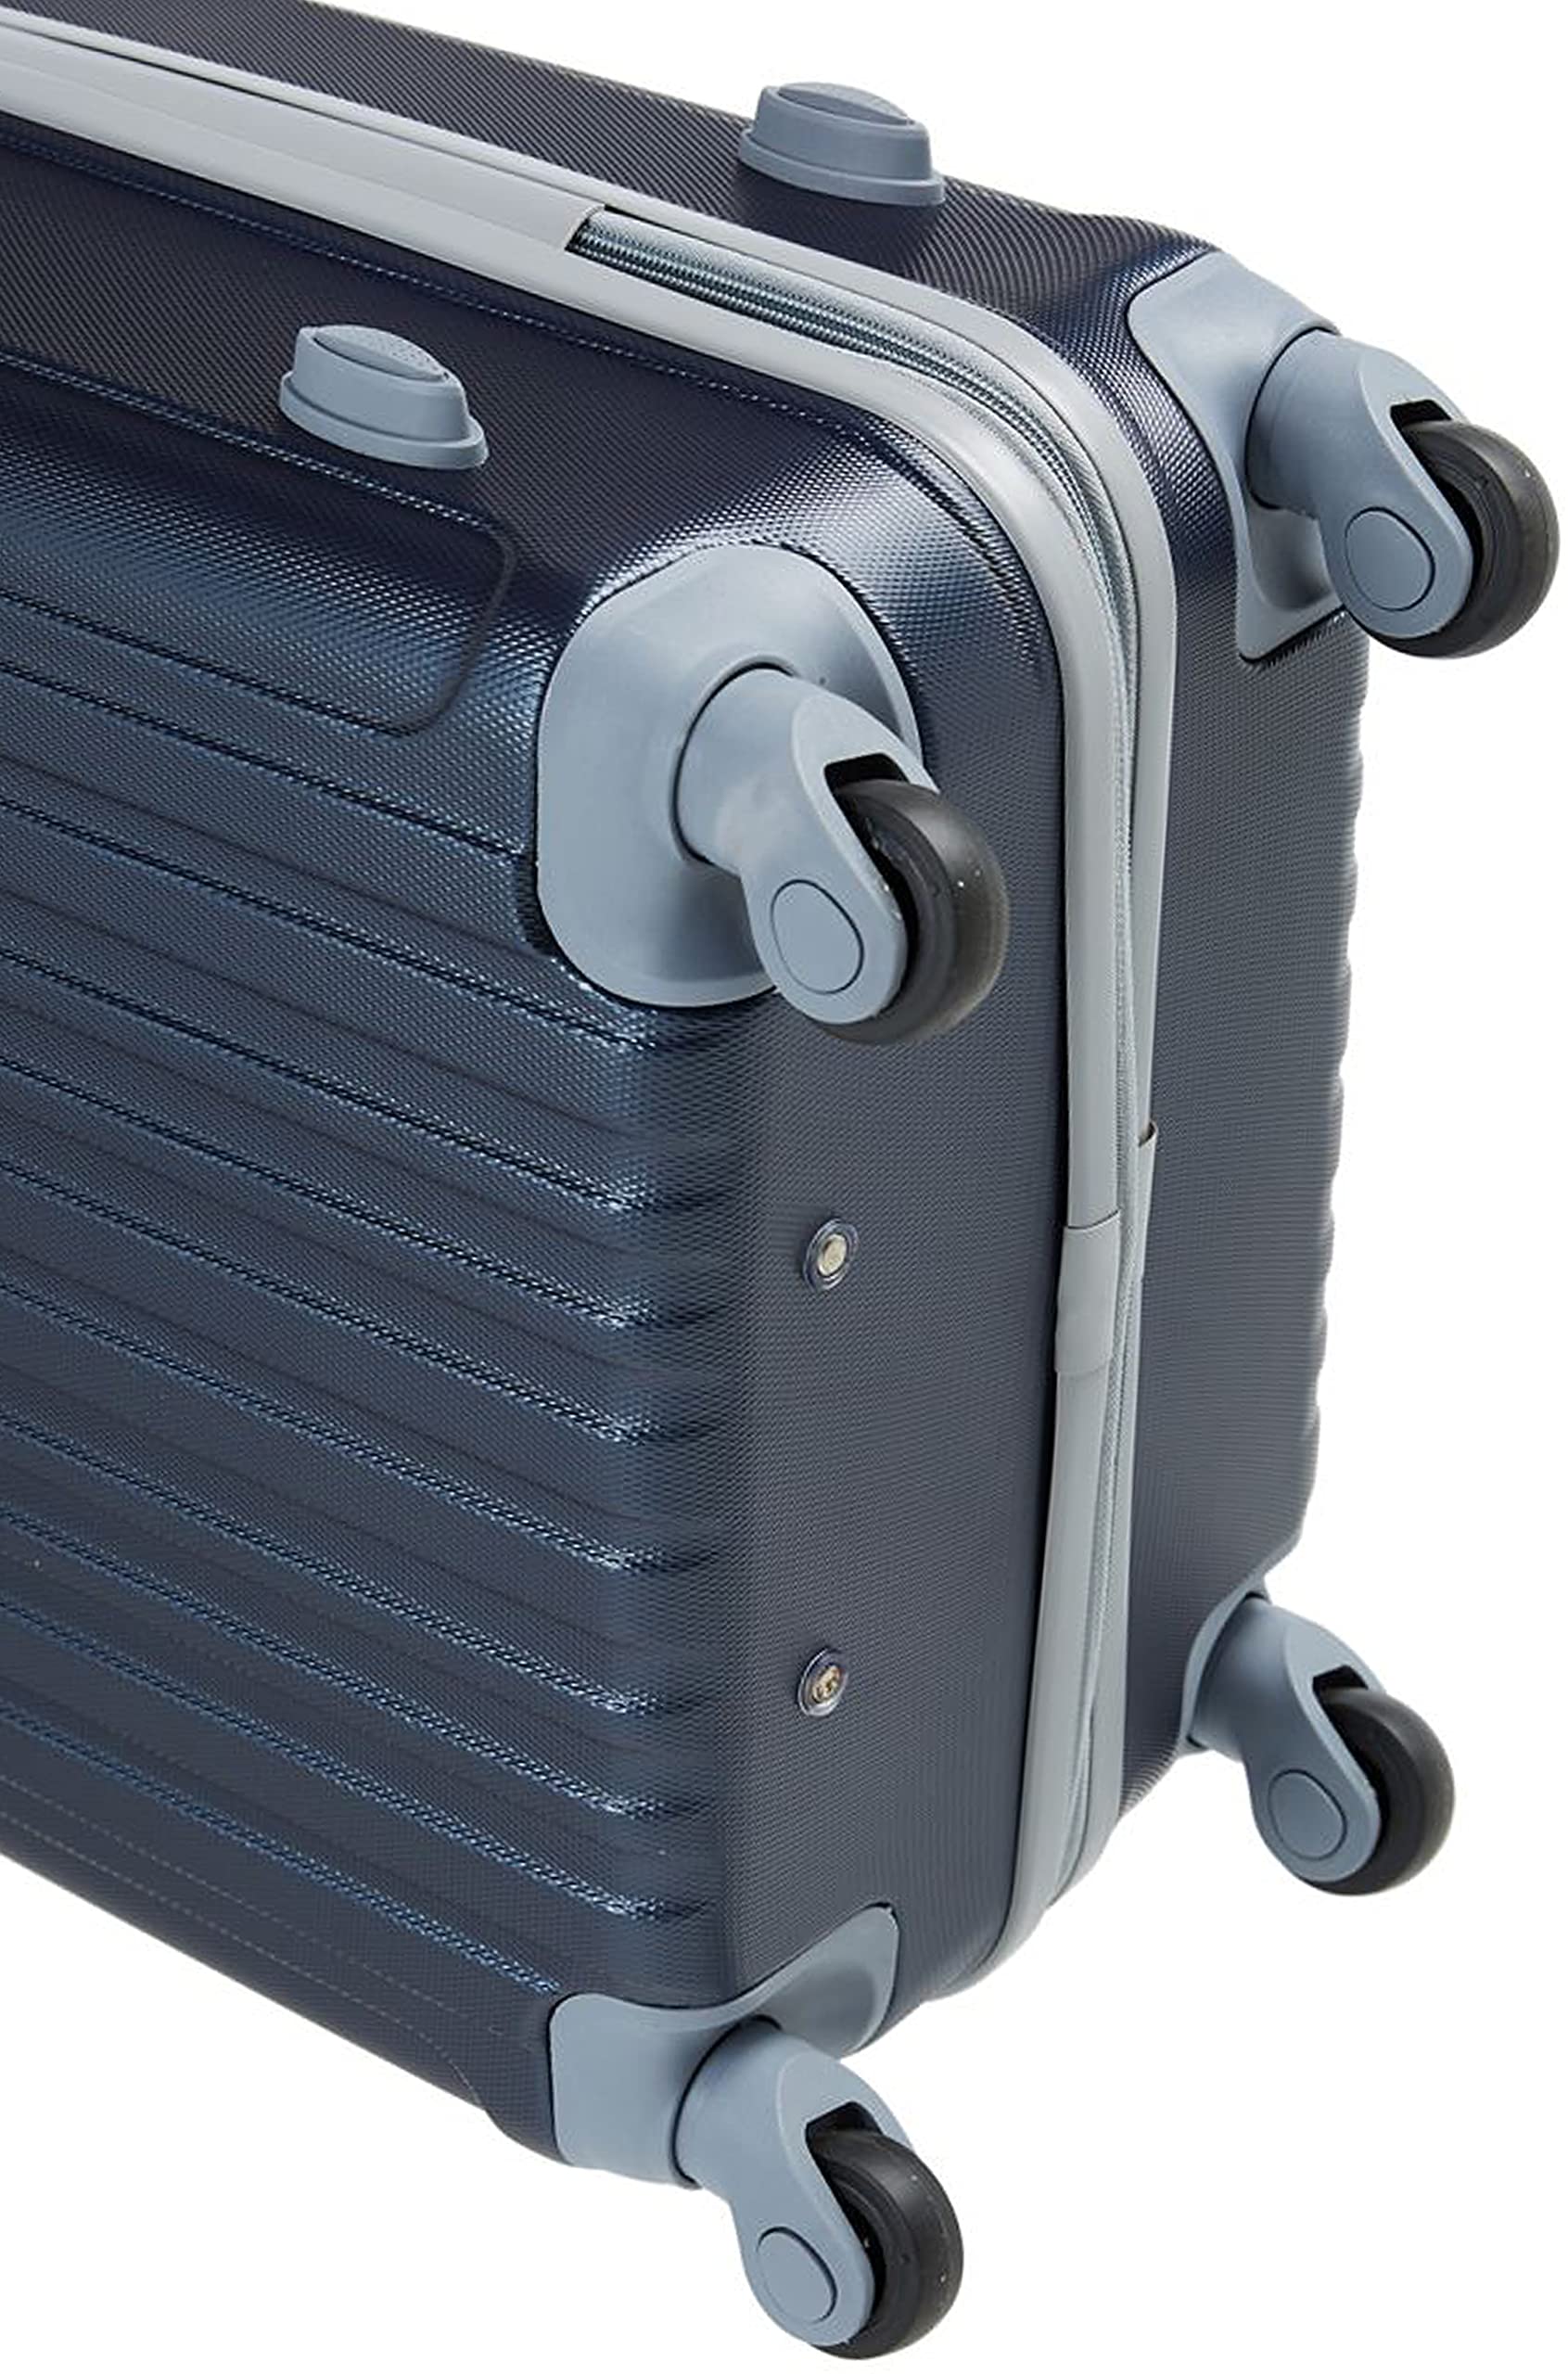 Senator Hard side Suitcase on Wheels Ultra Lightweight ABS Light Spinner Trolley Case with Spinner Wheels 4 - KH132 (20, Navy Blue) شنطة جانبية صلبة من سيناتور بعجلات خفيفة الوزن للغاية من مادة ABS مع عجلات دوارة 4